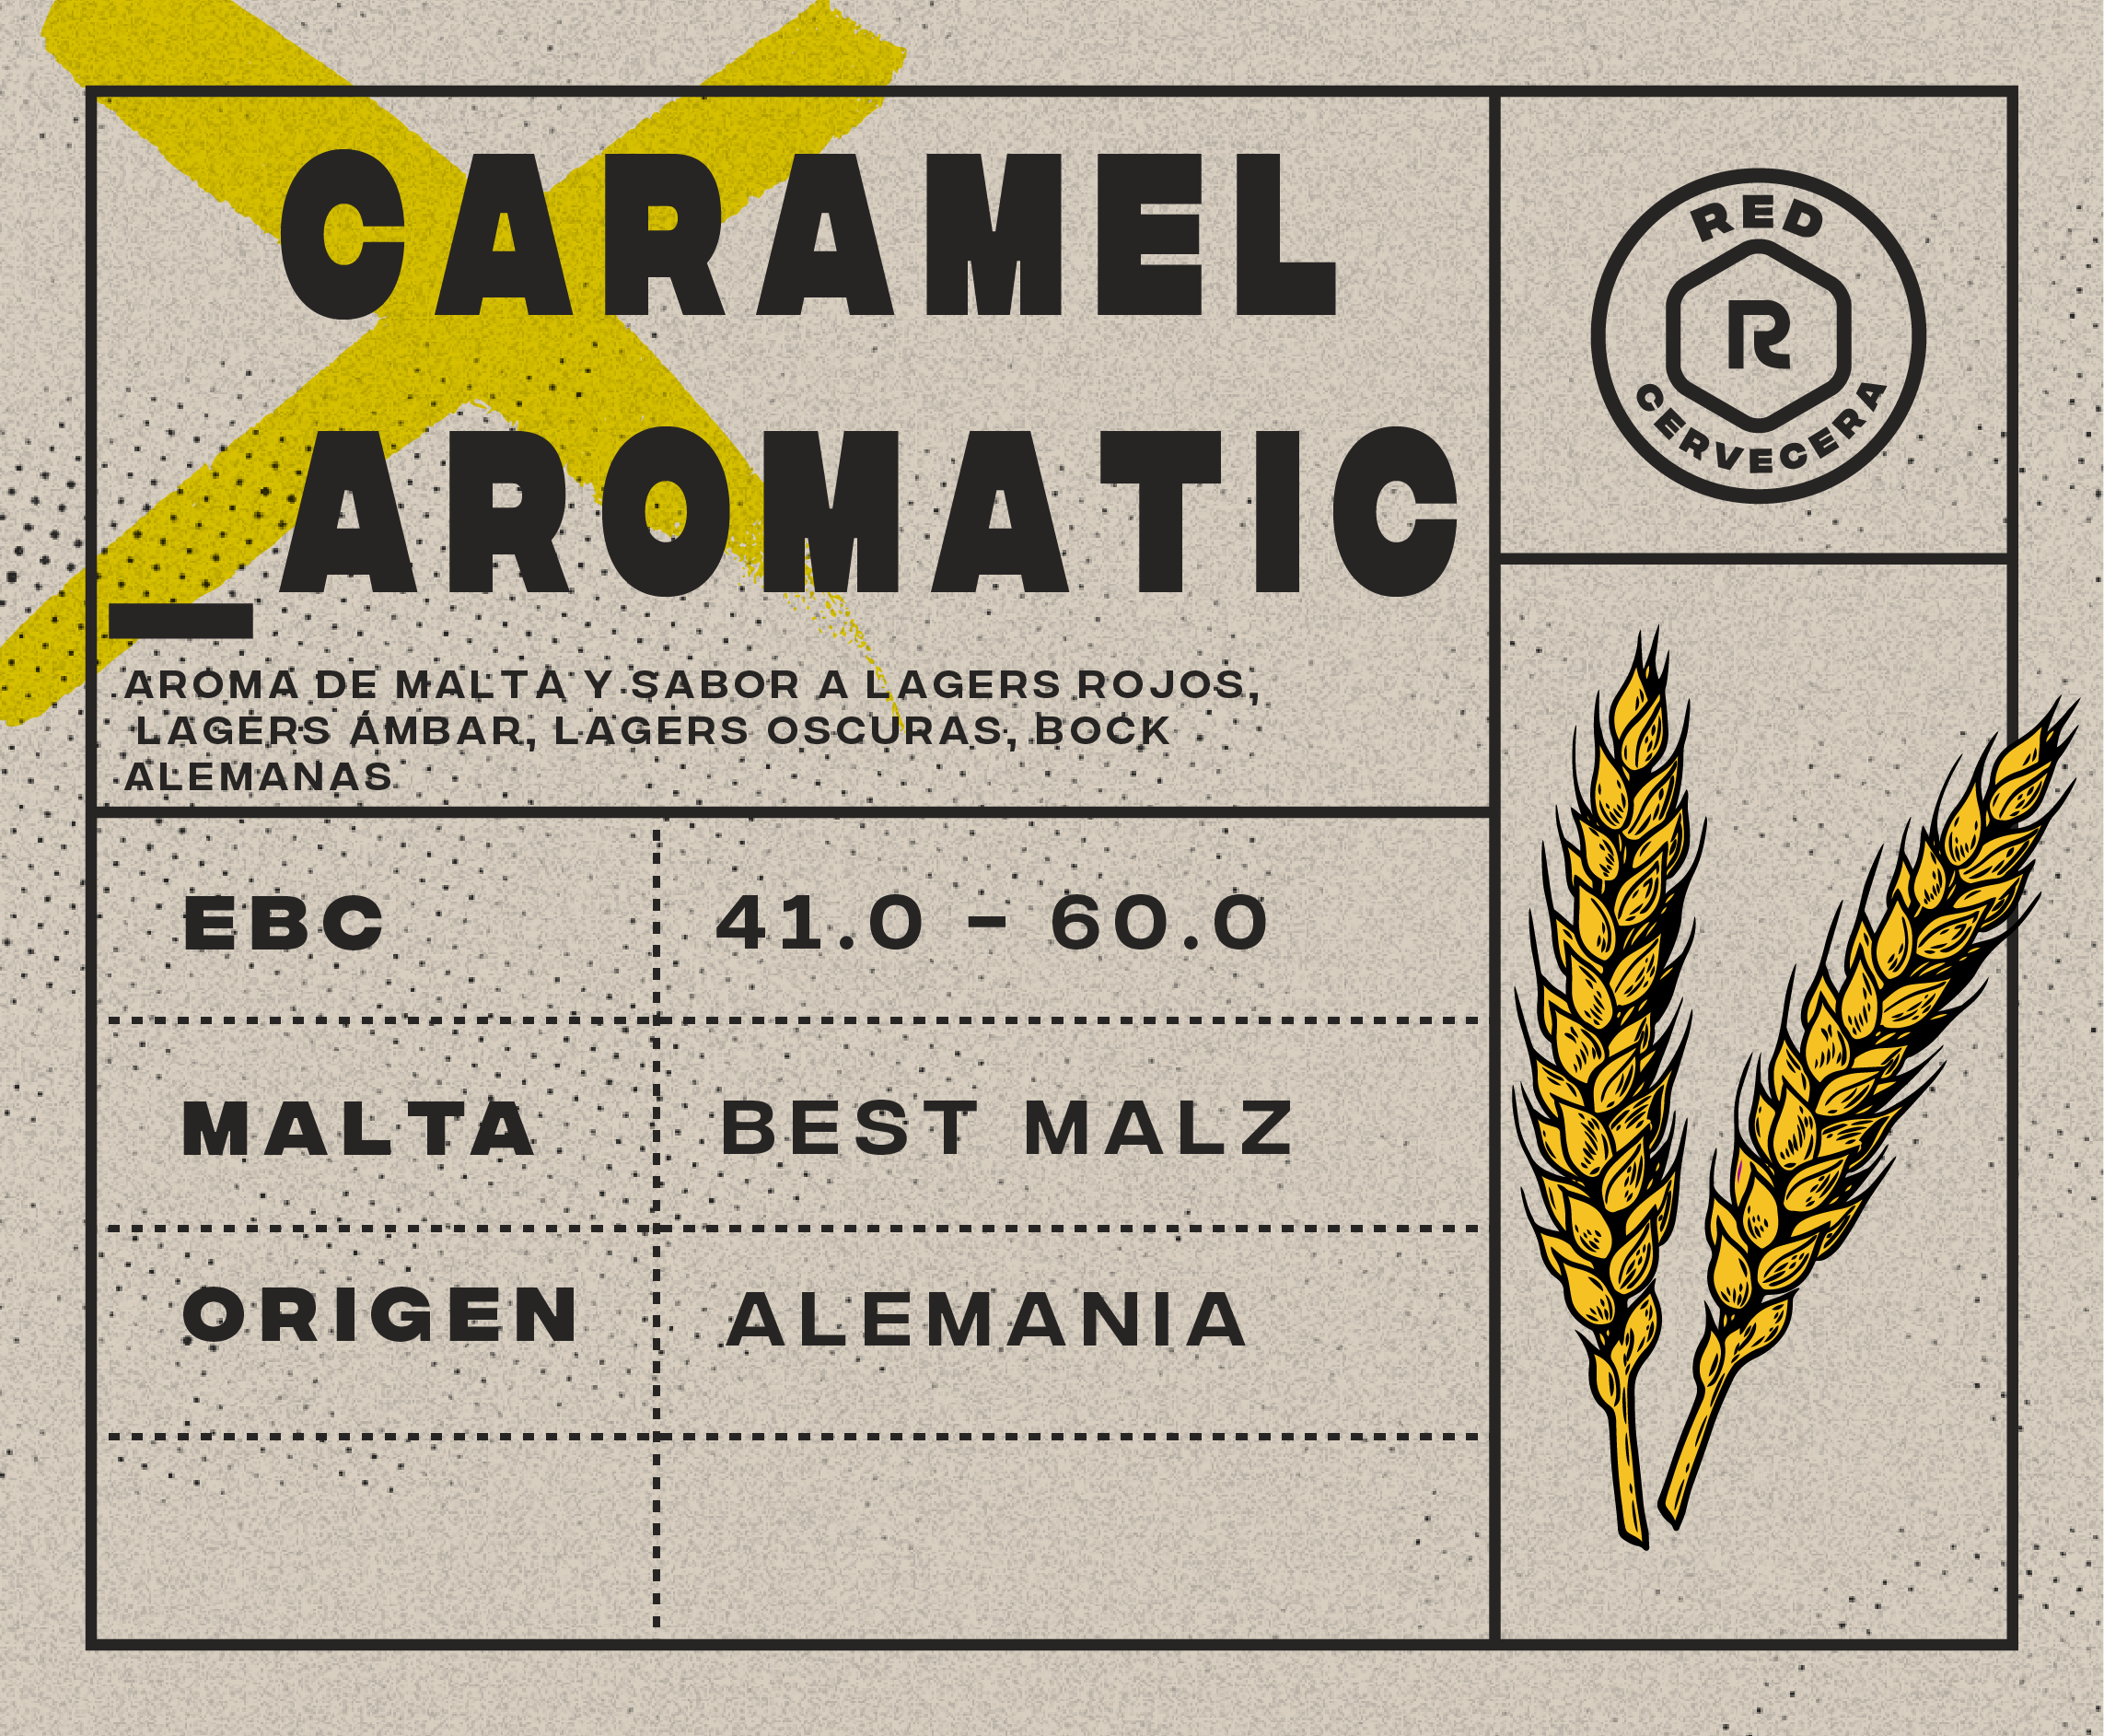 12-Caramel Aromatic (EBC 41.0-60.0) (1 Kg.)